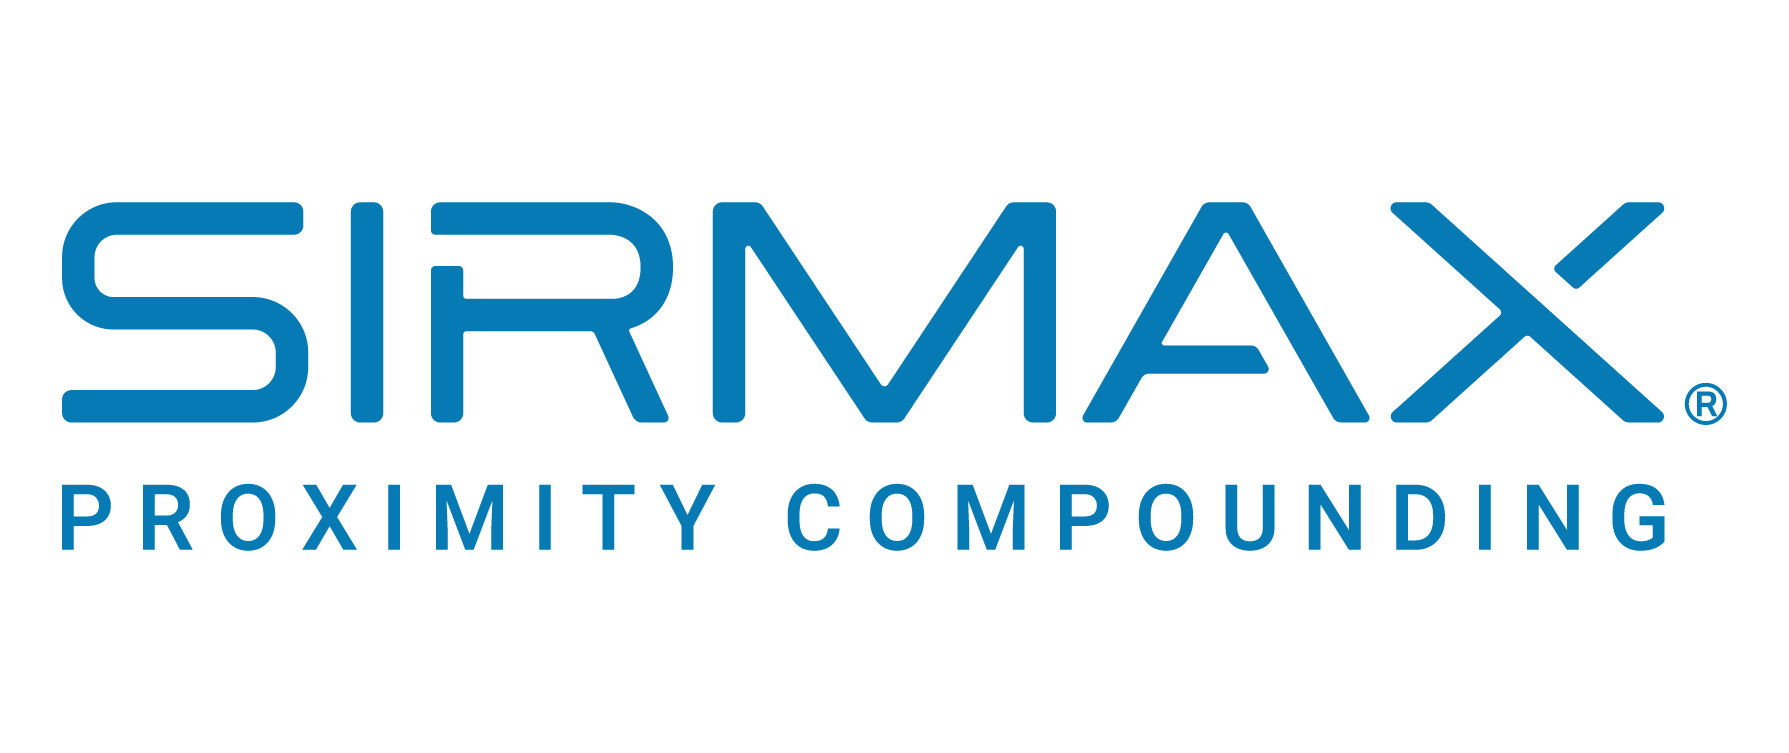 https://fame-usa.com/wp-content/uploads/2022/11/Sirmax-Logo-Proximity-Compounding-2021-Blu.jpg